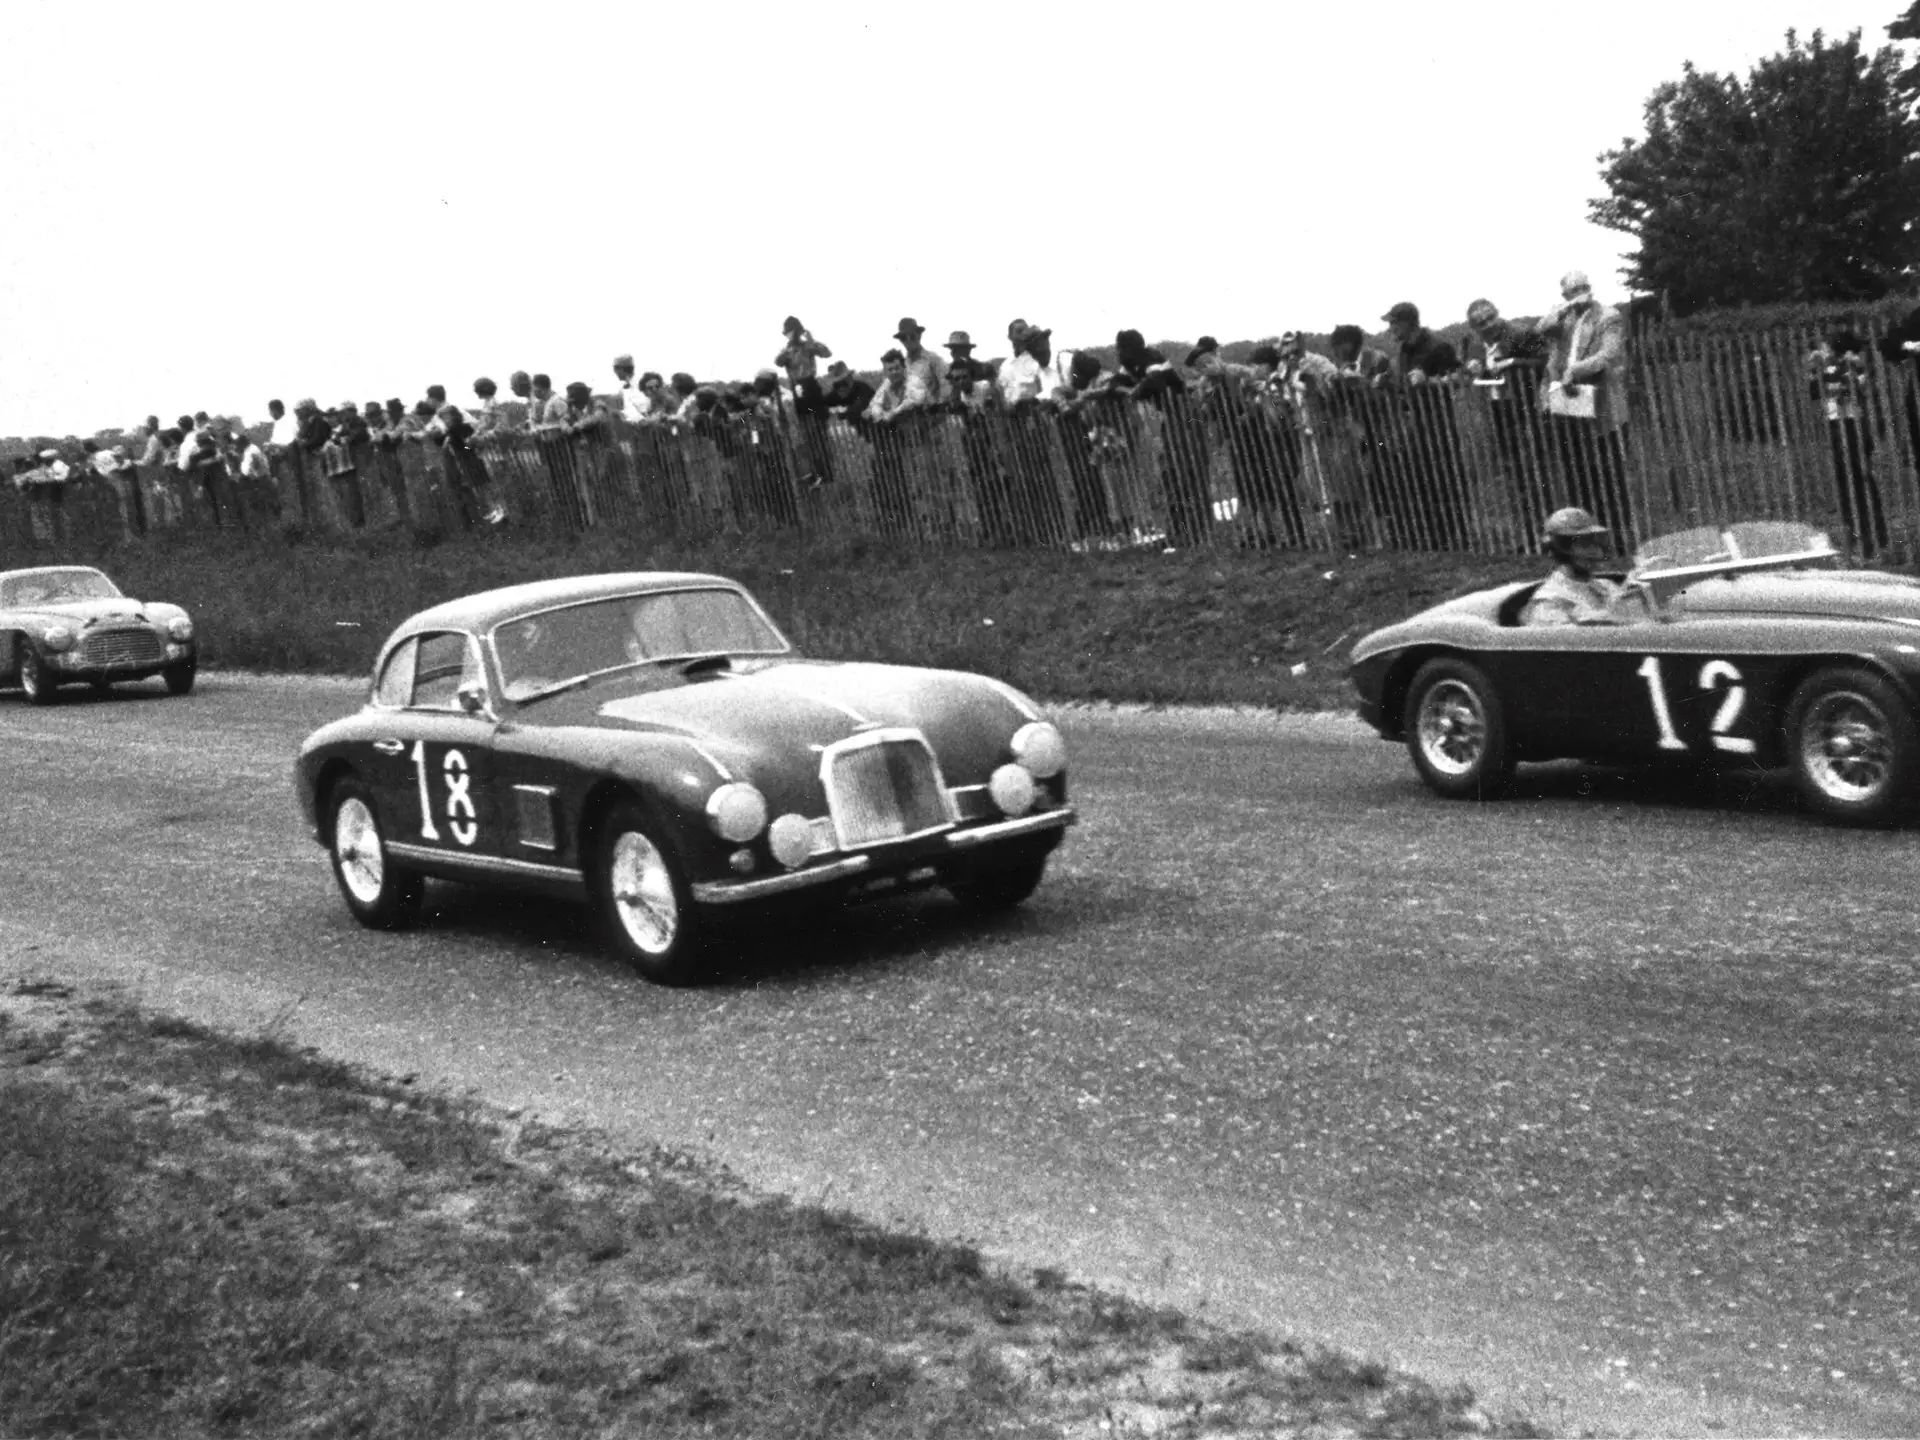 The first Aston Martin DB2 racing